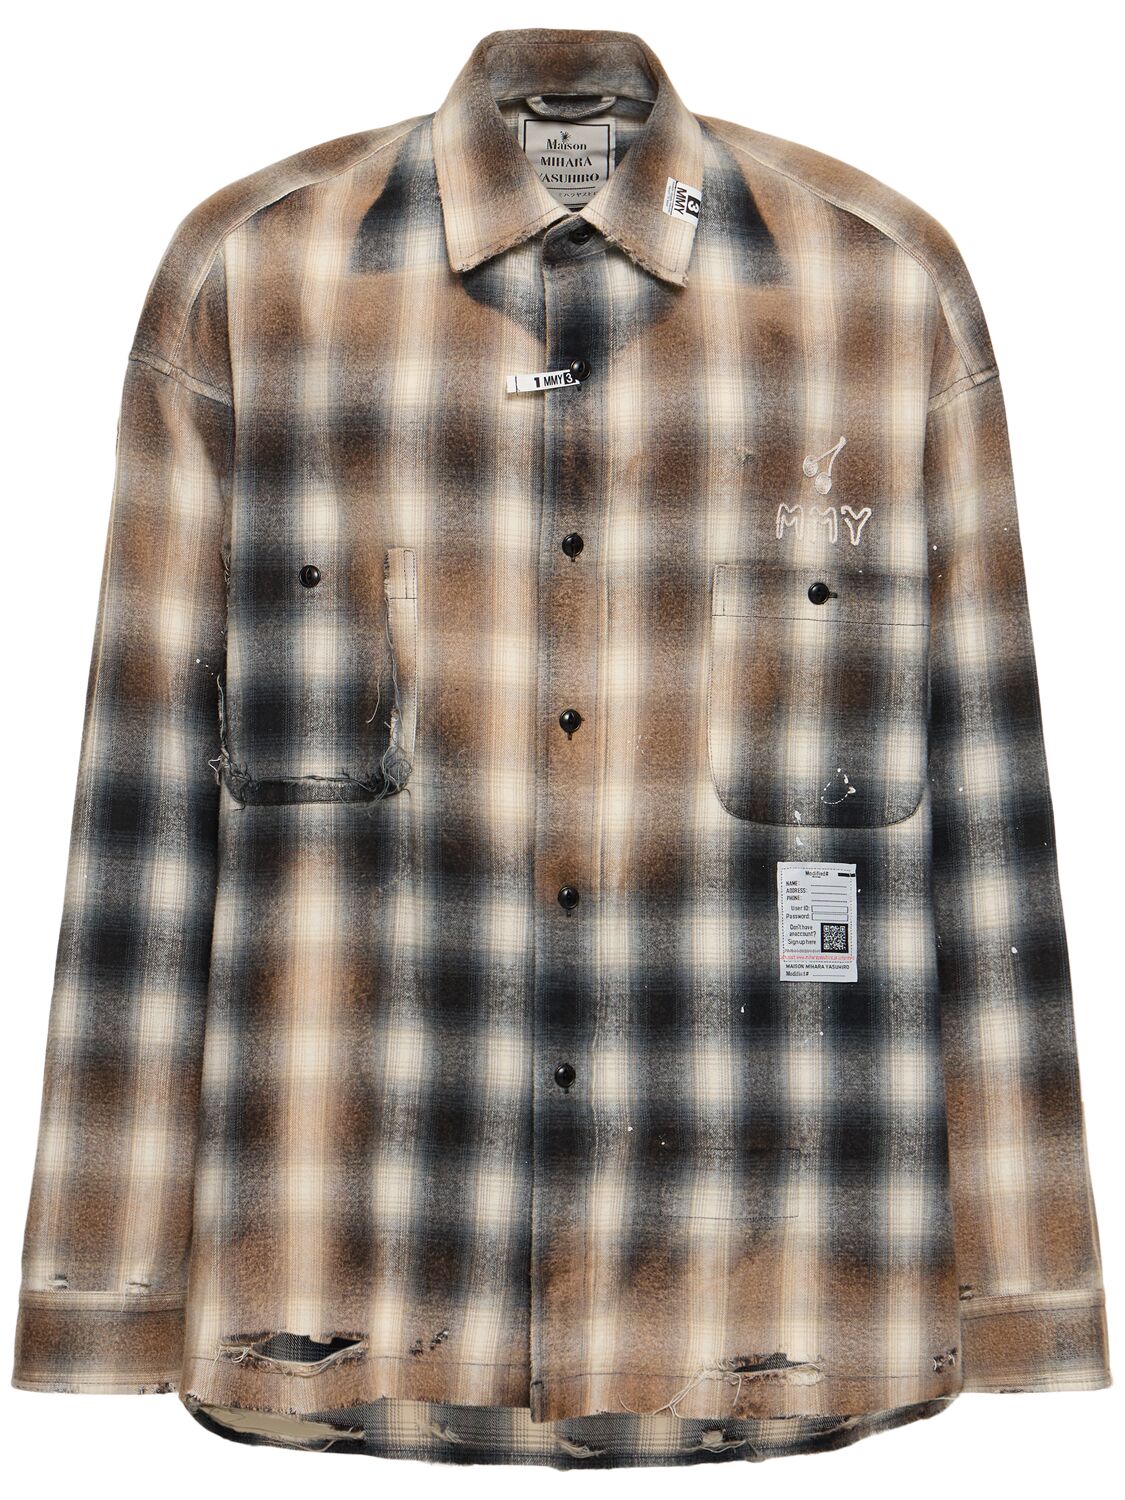 Vintage Check Cotton Shirt